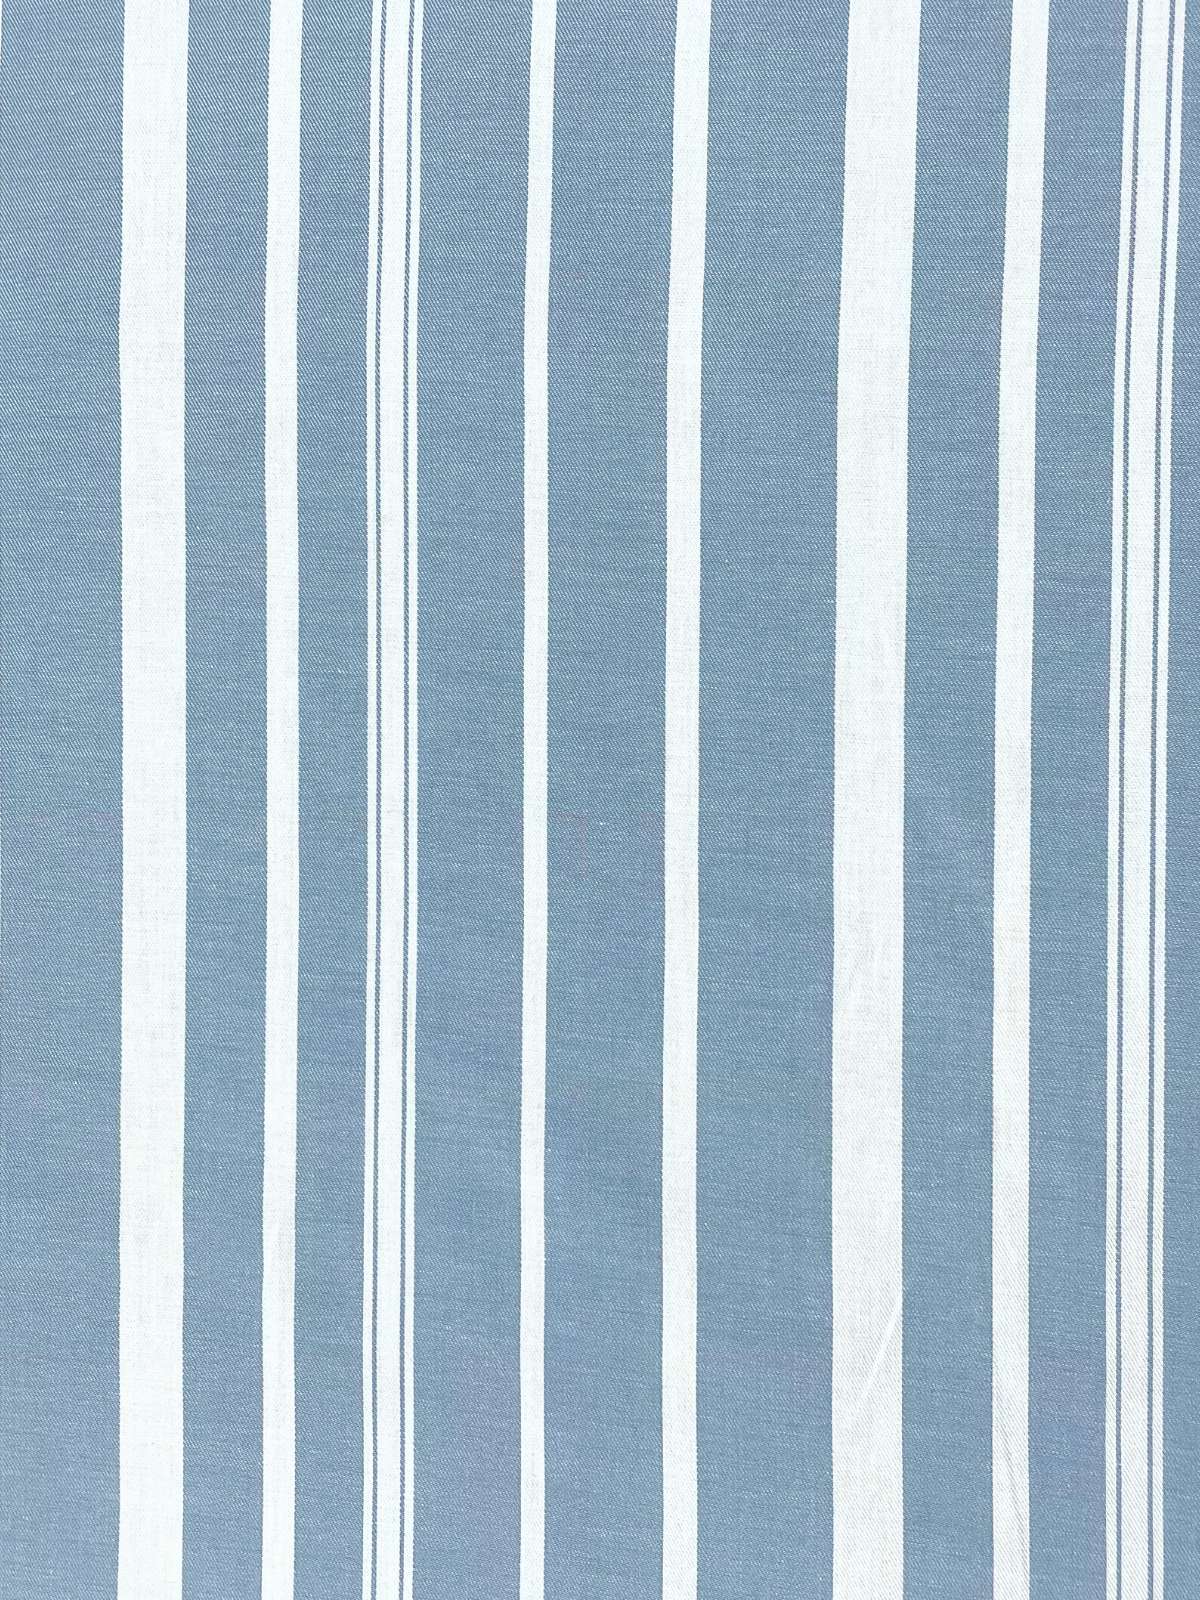 Argentina Stripe Cotton Short - Blue/White